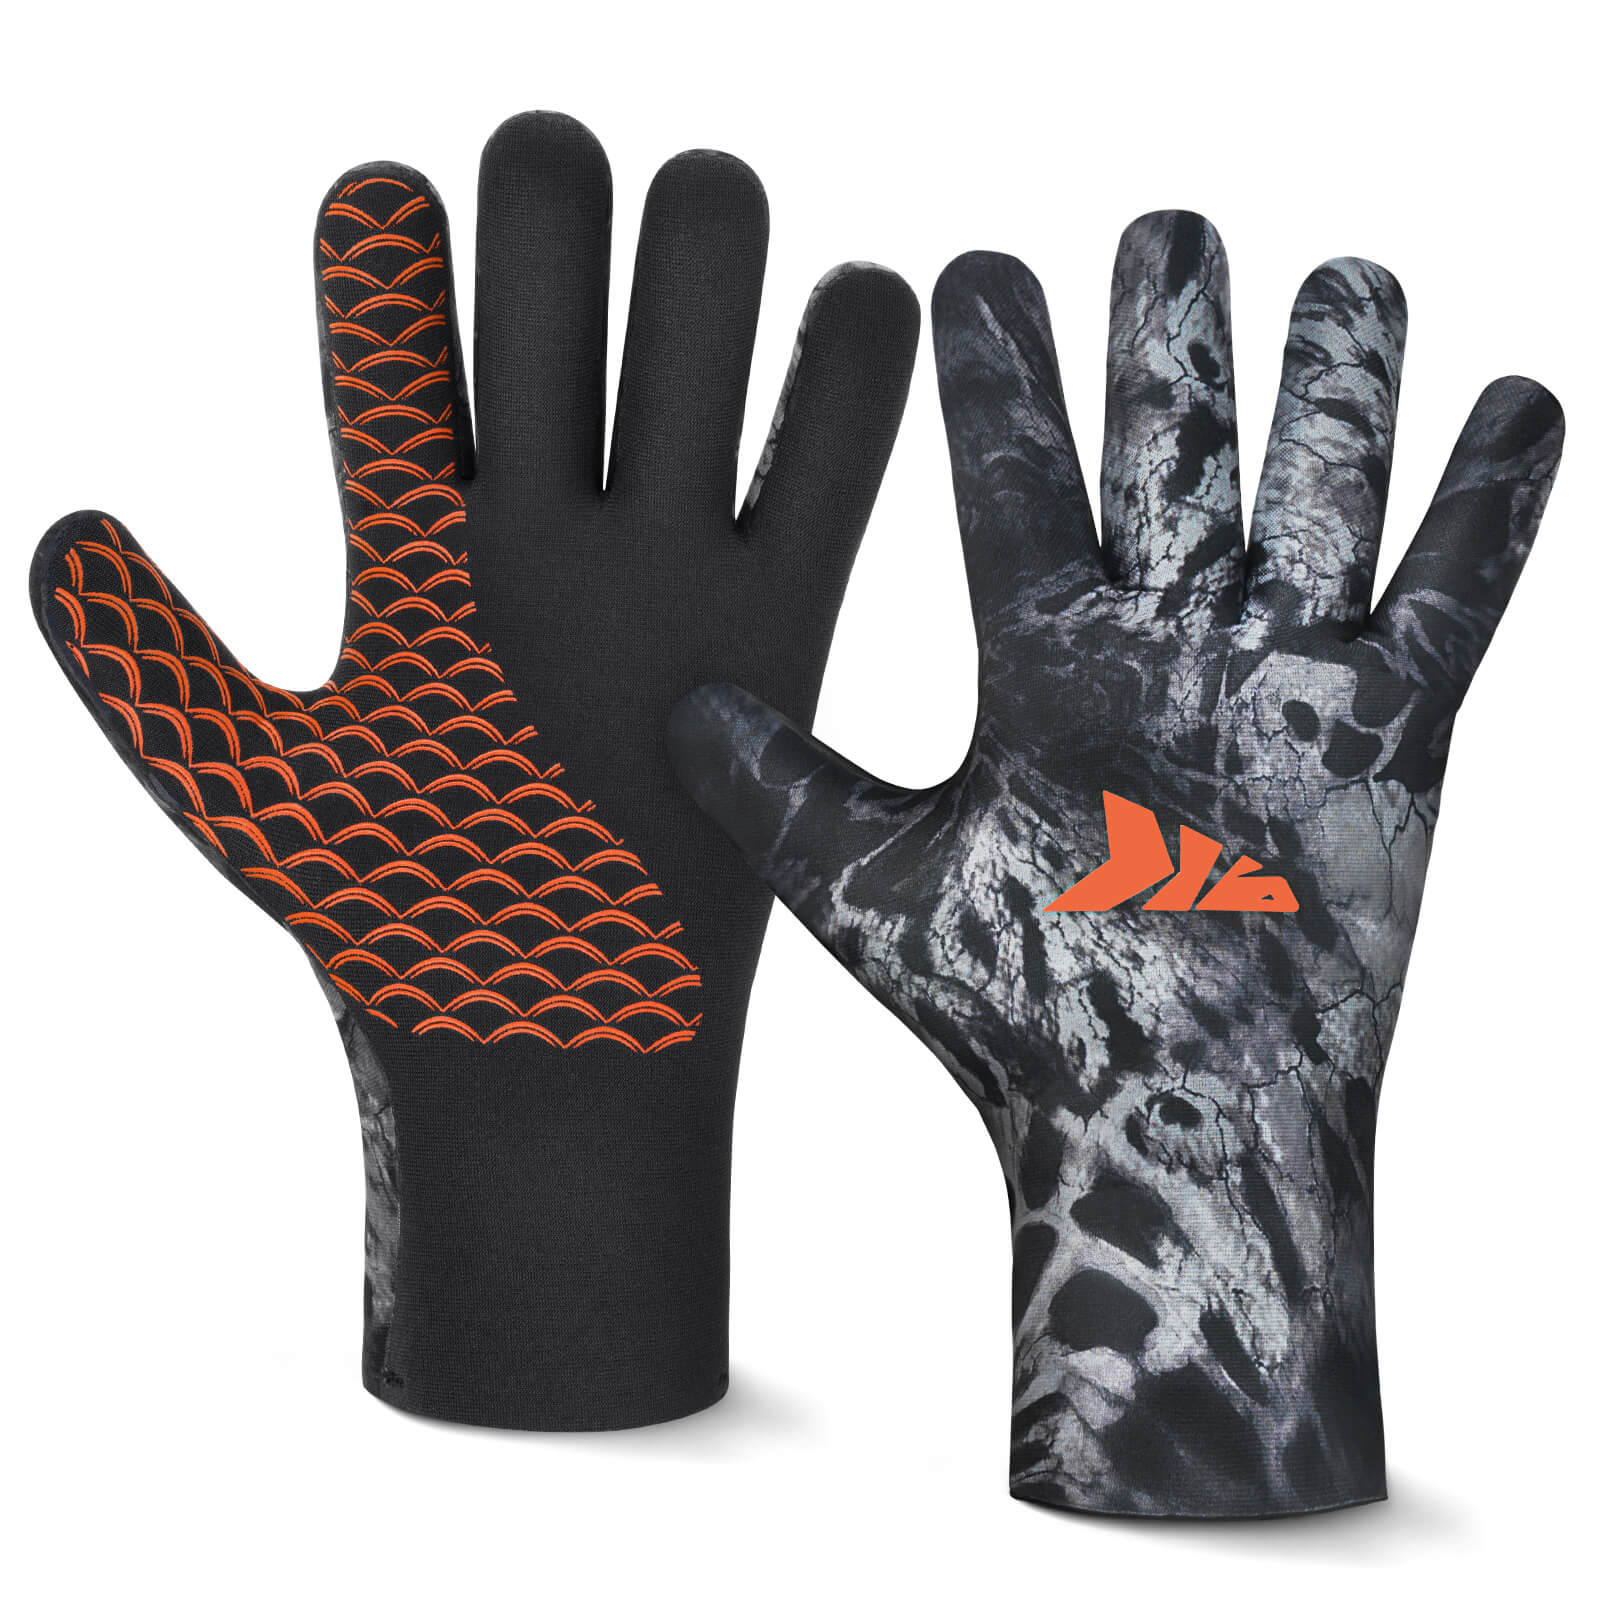 KastKing IceRiver Winter Fishing Gloves, Waterproof Warm Gloves